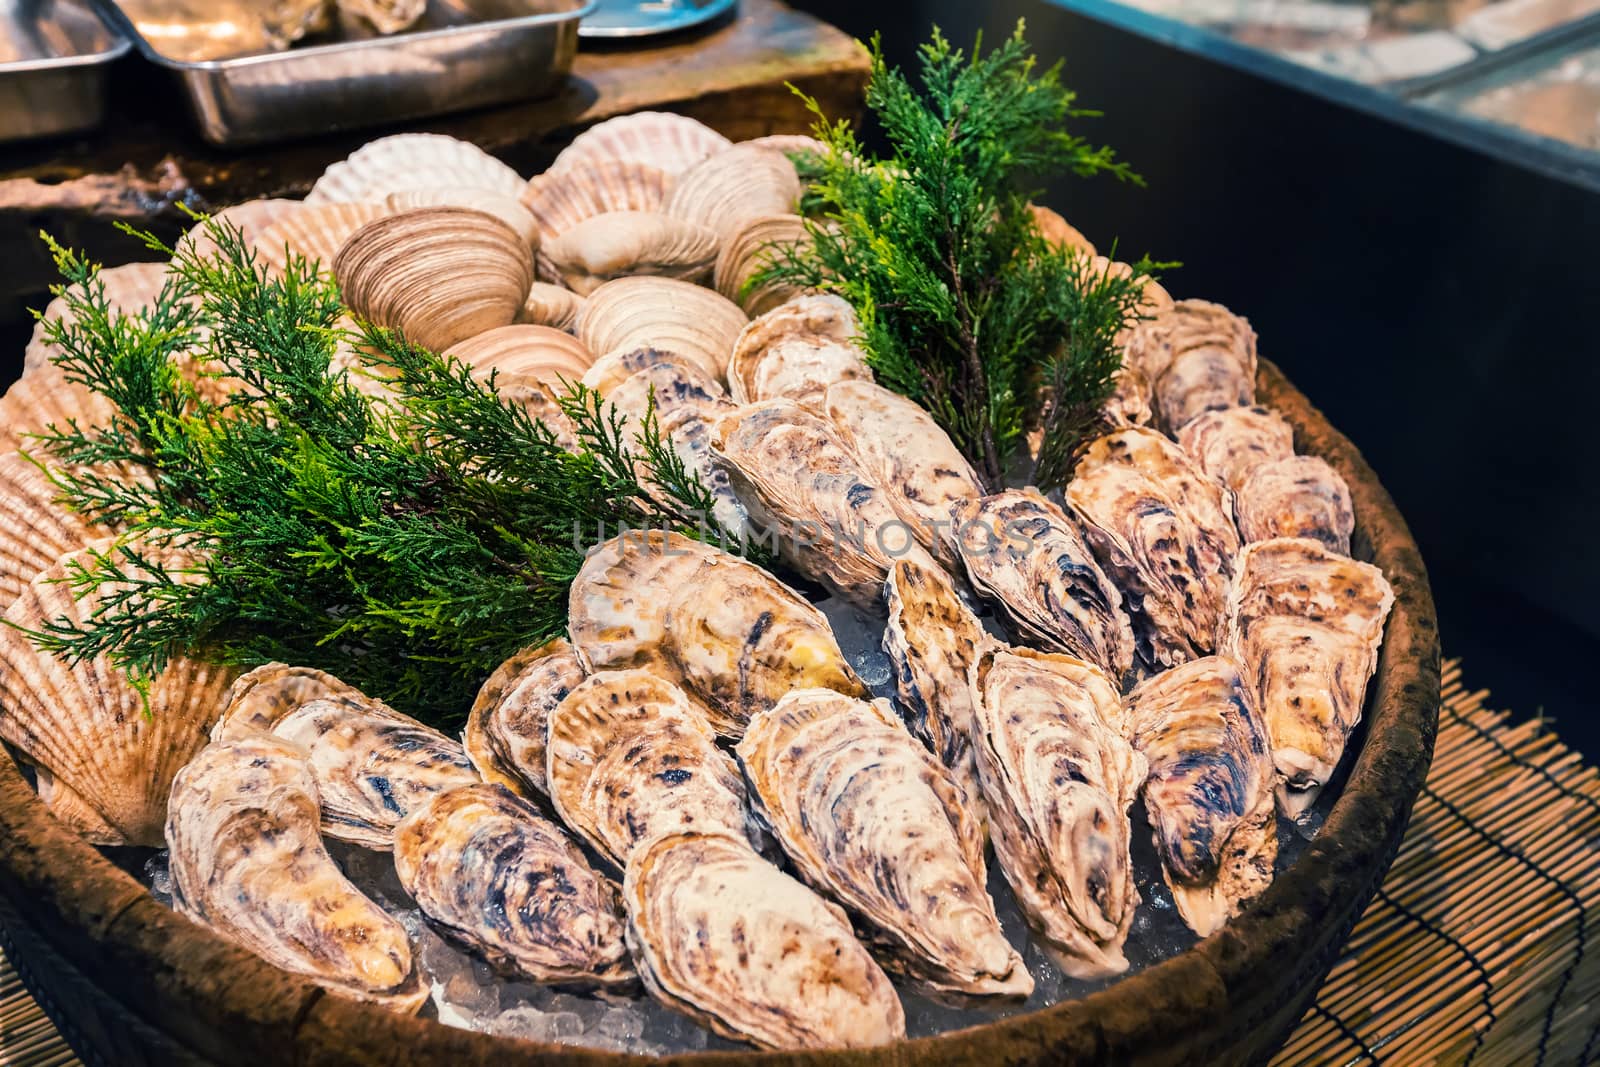 Fresh oyster on ice as street food at Nishiki market, Kyoto, Japan by zhu_zhu